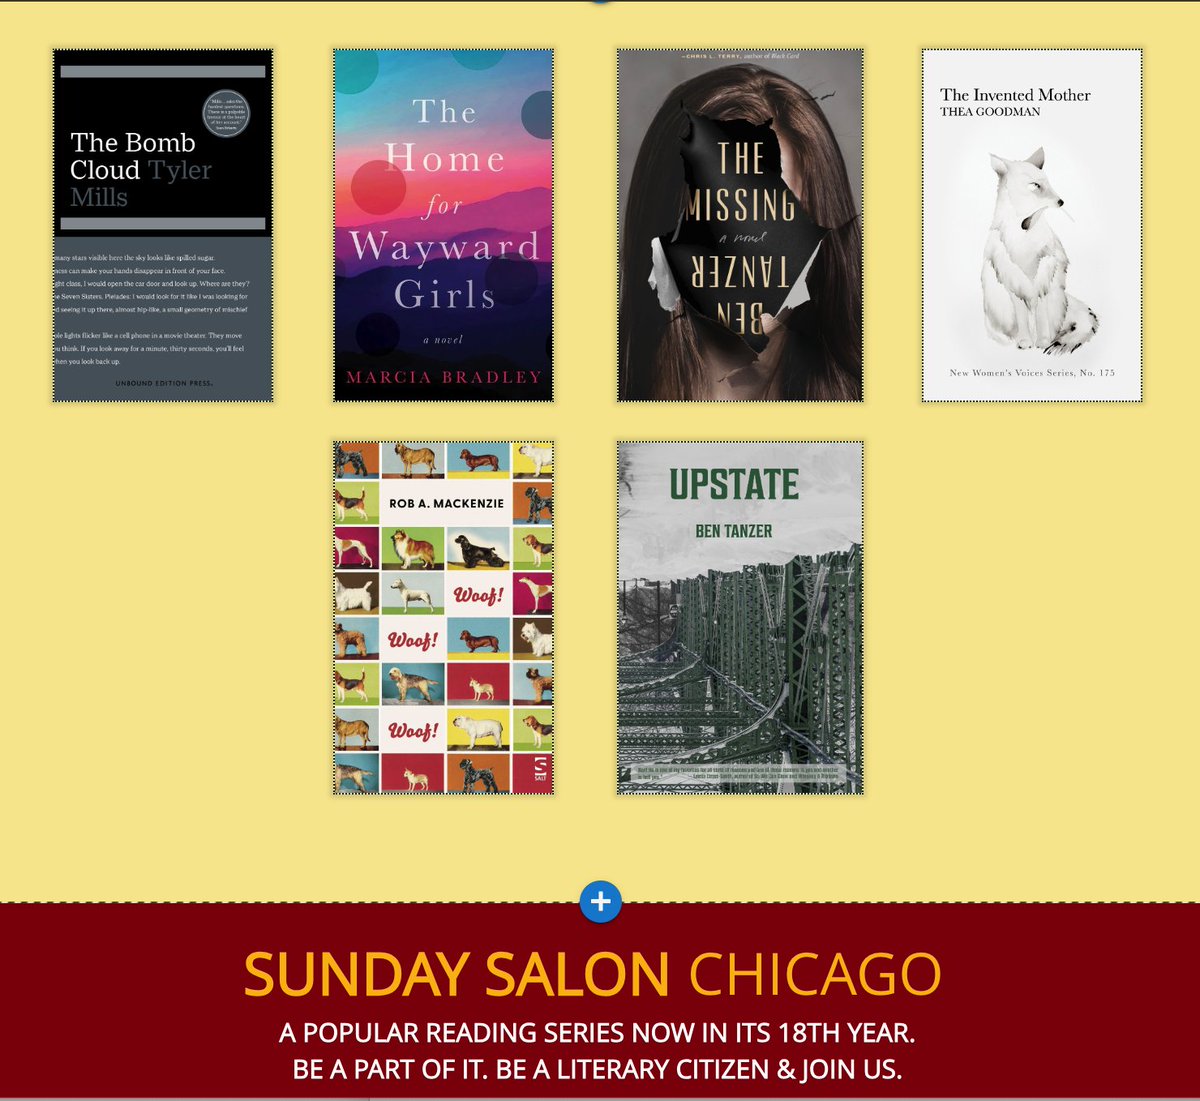 REMINDER! Sunday Salon Chicago happens in a week on 3/24 at 7 pm @RoscoeBooks w/ an amazing lineup, featuring @MarciaBradley, @TylerMPoetry, @BenTanzer, Kenyatta Rogers, Thea Goodman & @RobAMackenzie1 of Blue Diode Press, Scotland @DiodeBlue 🤗🙏👌 Visit sundaysalon-chicago.com —